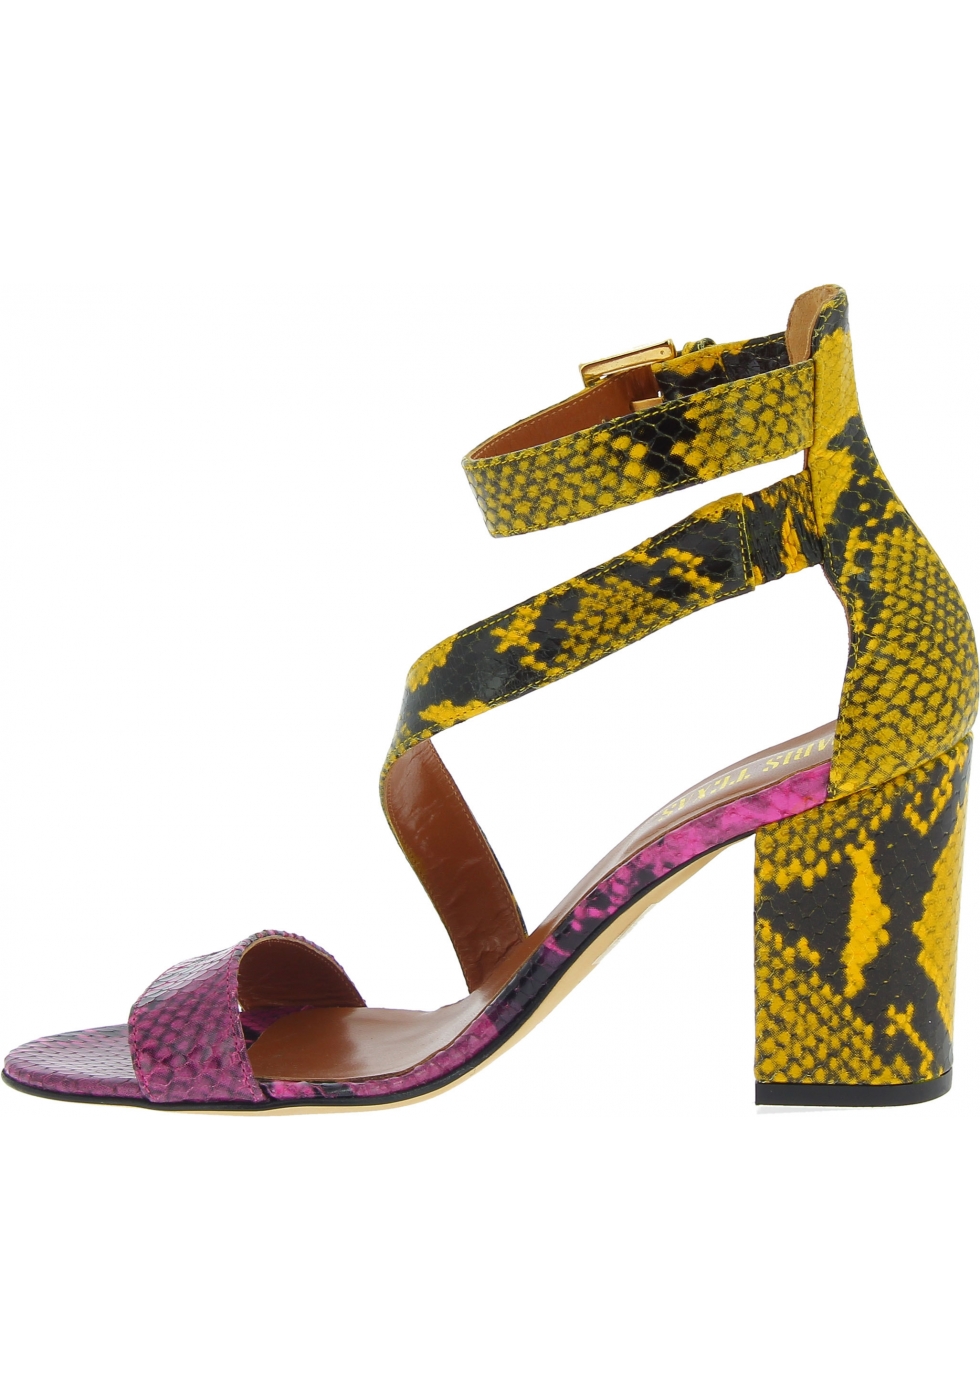 Paris Texas Women's ankle strap heels sandals in multicolored python